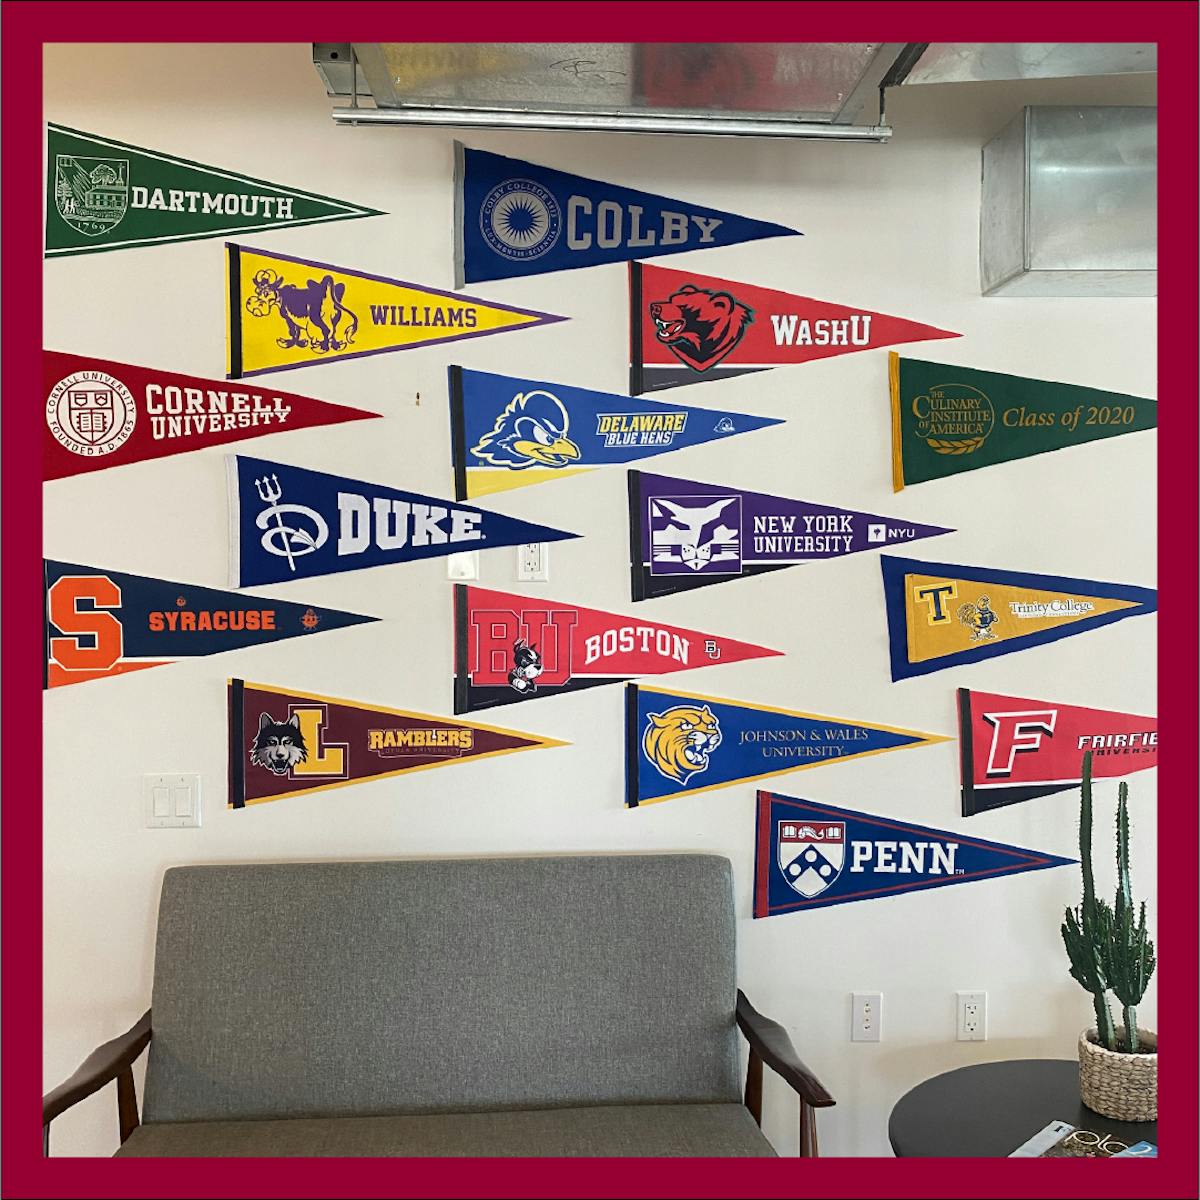 University flags